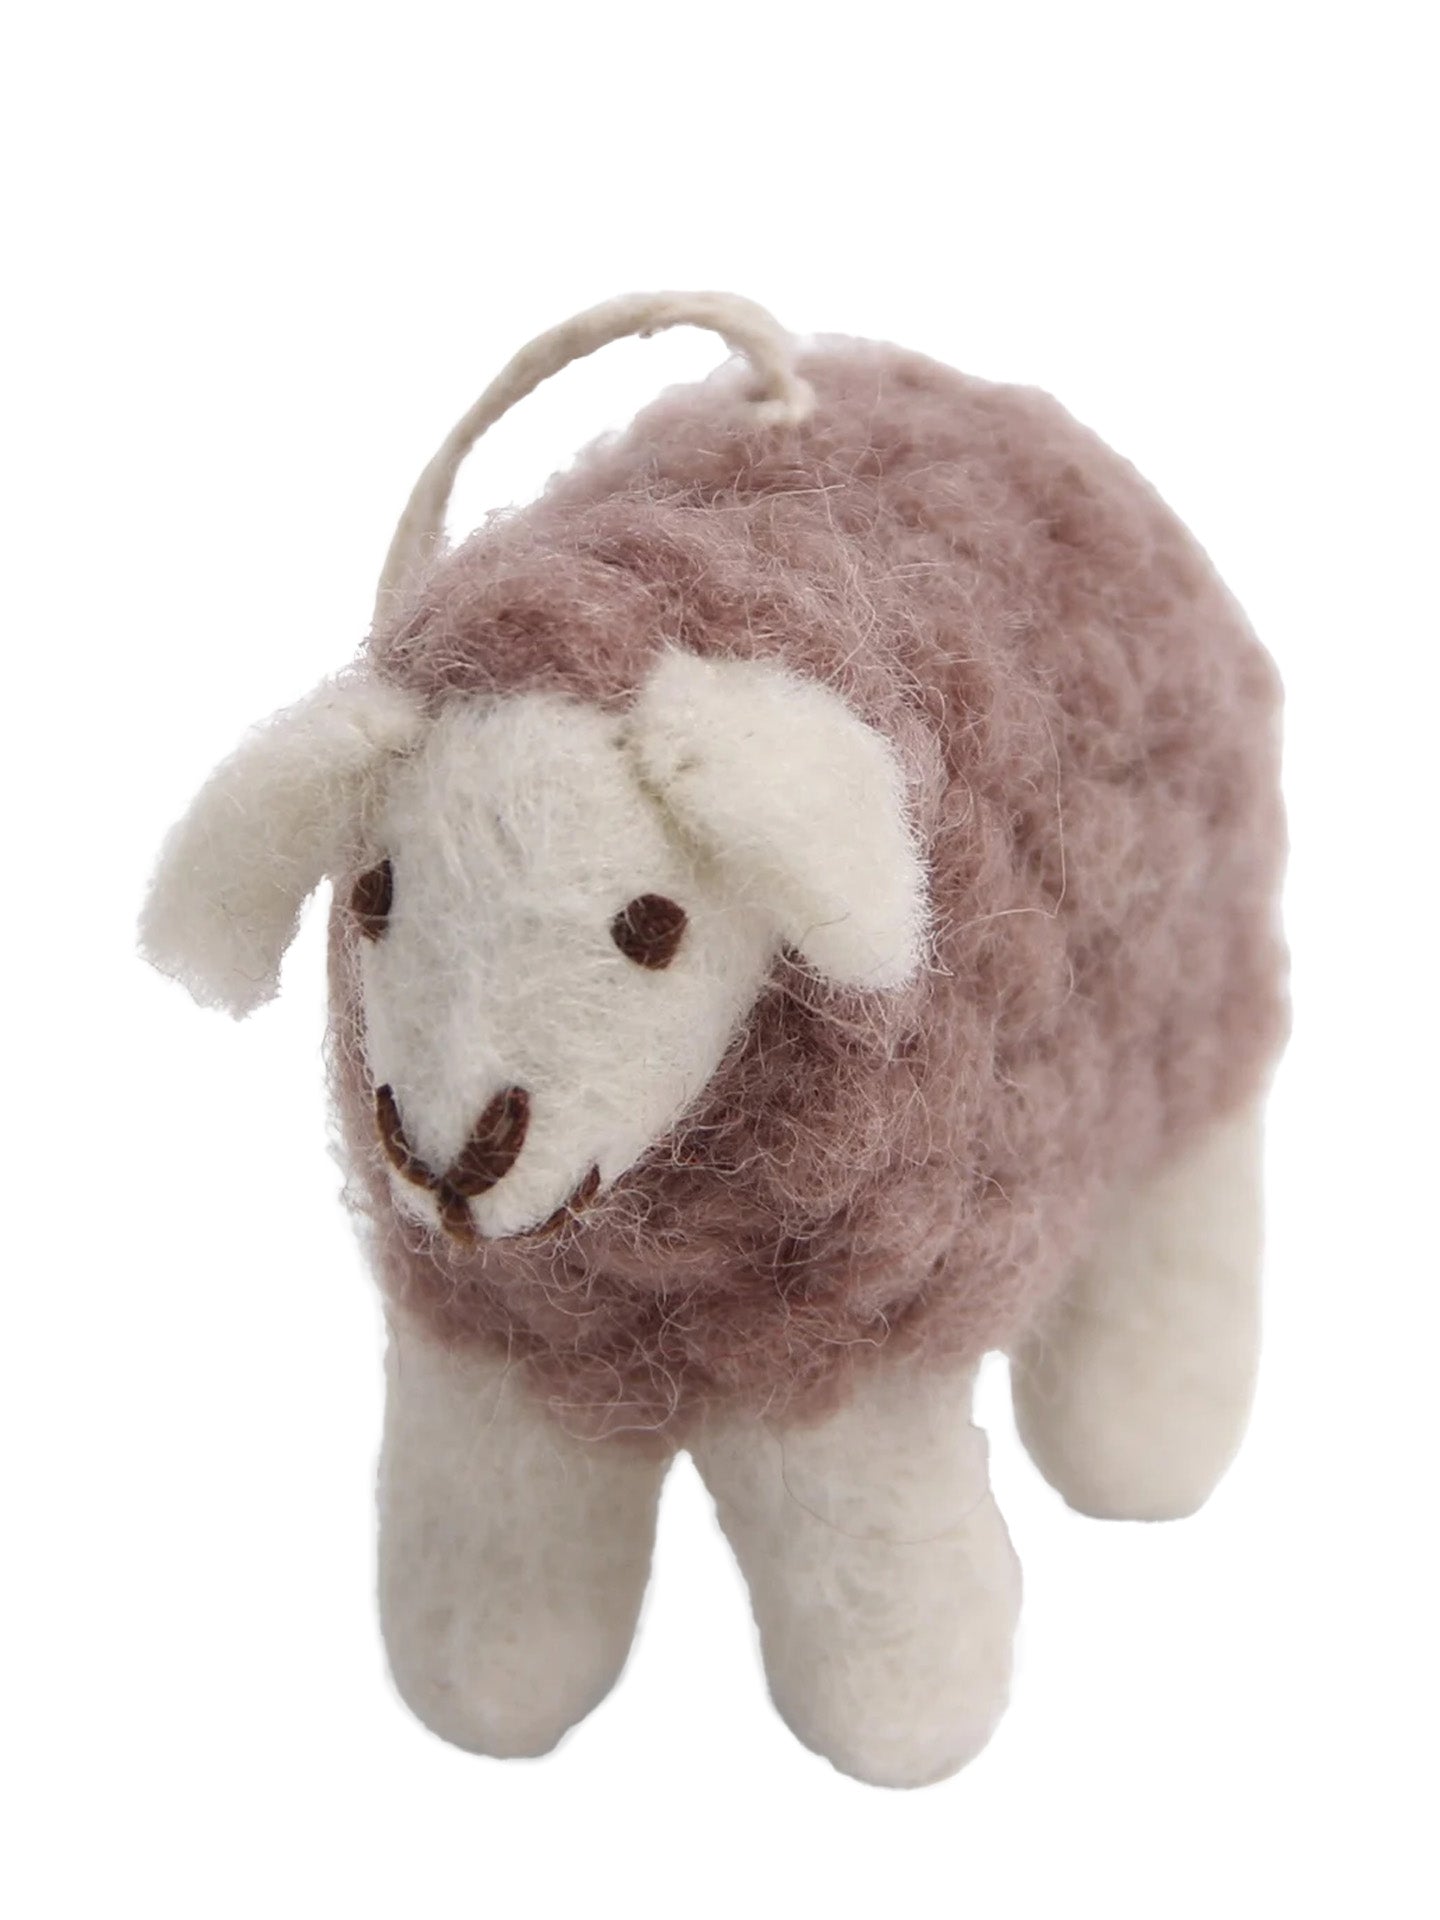 Felt mini sheep ornament, lavender